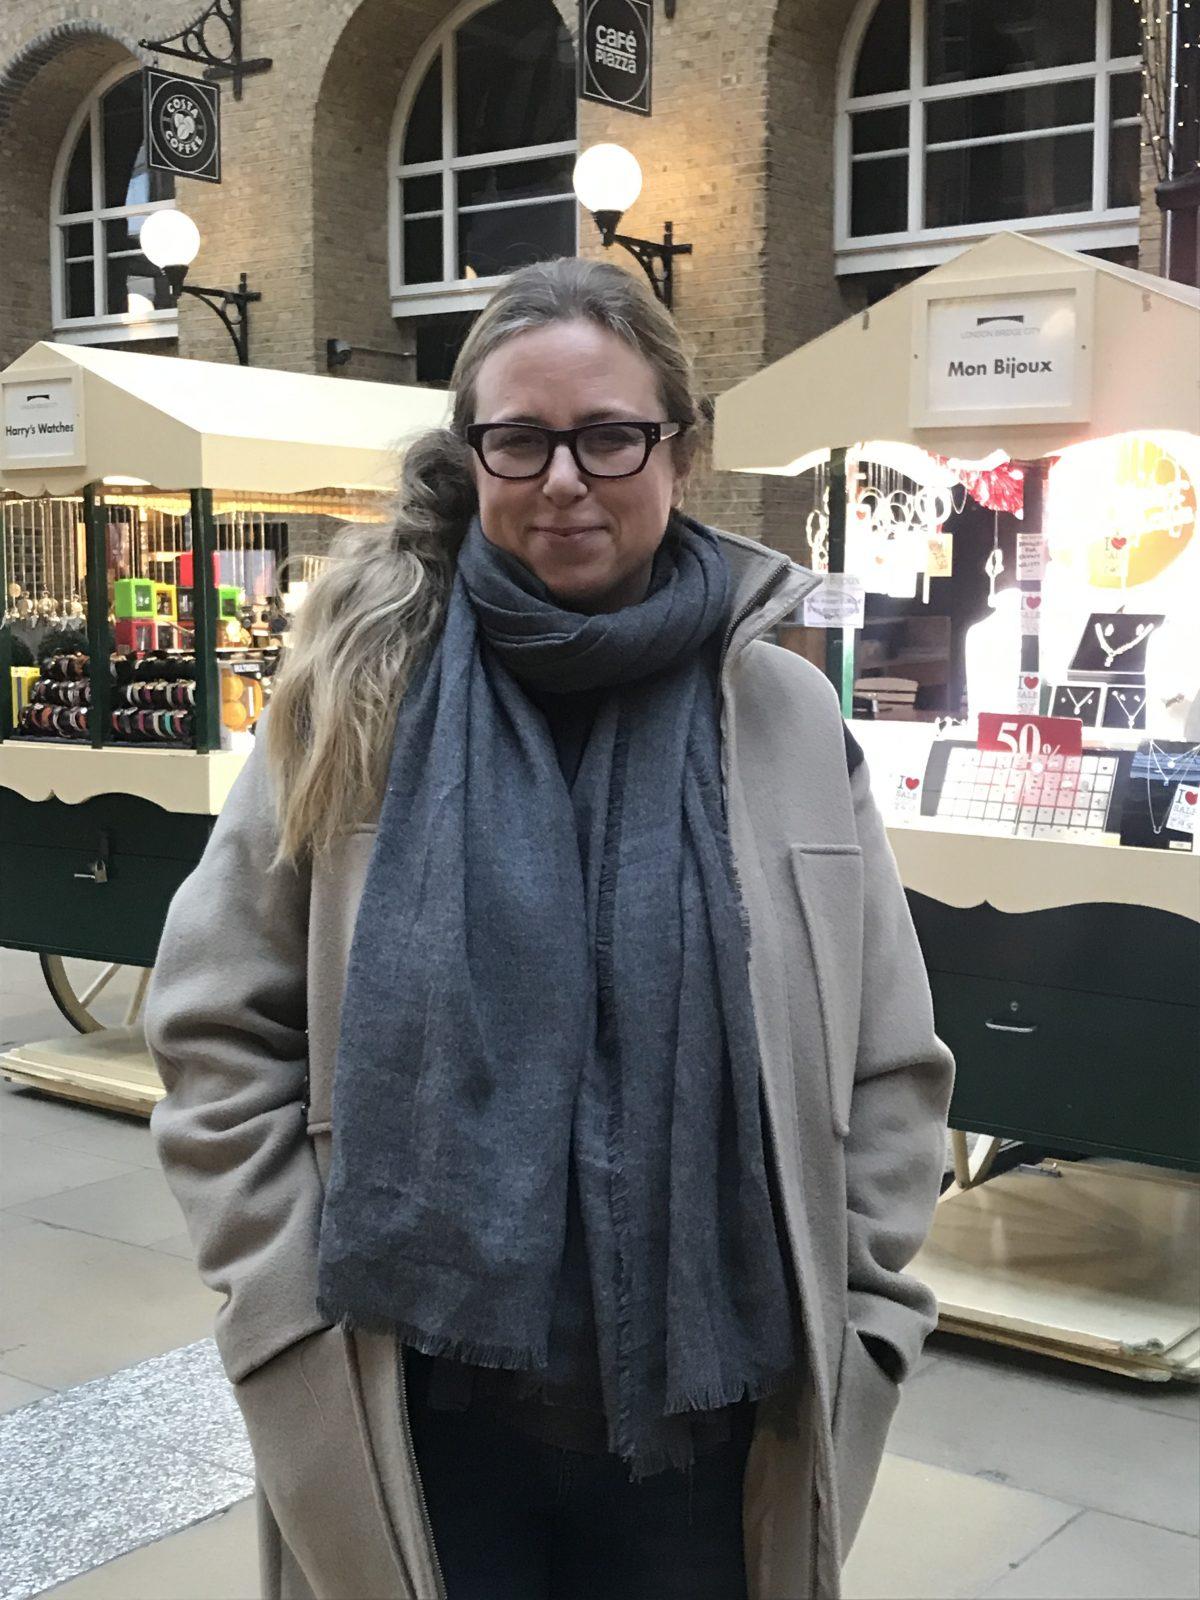 Antonia Senior in London on Jan. 23, 2019. (Stuart Liess/The Epoch Times)